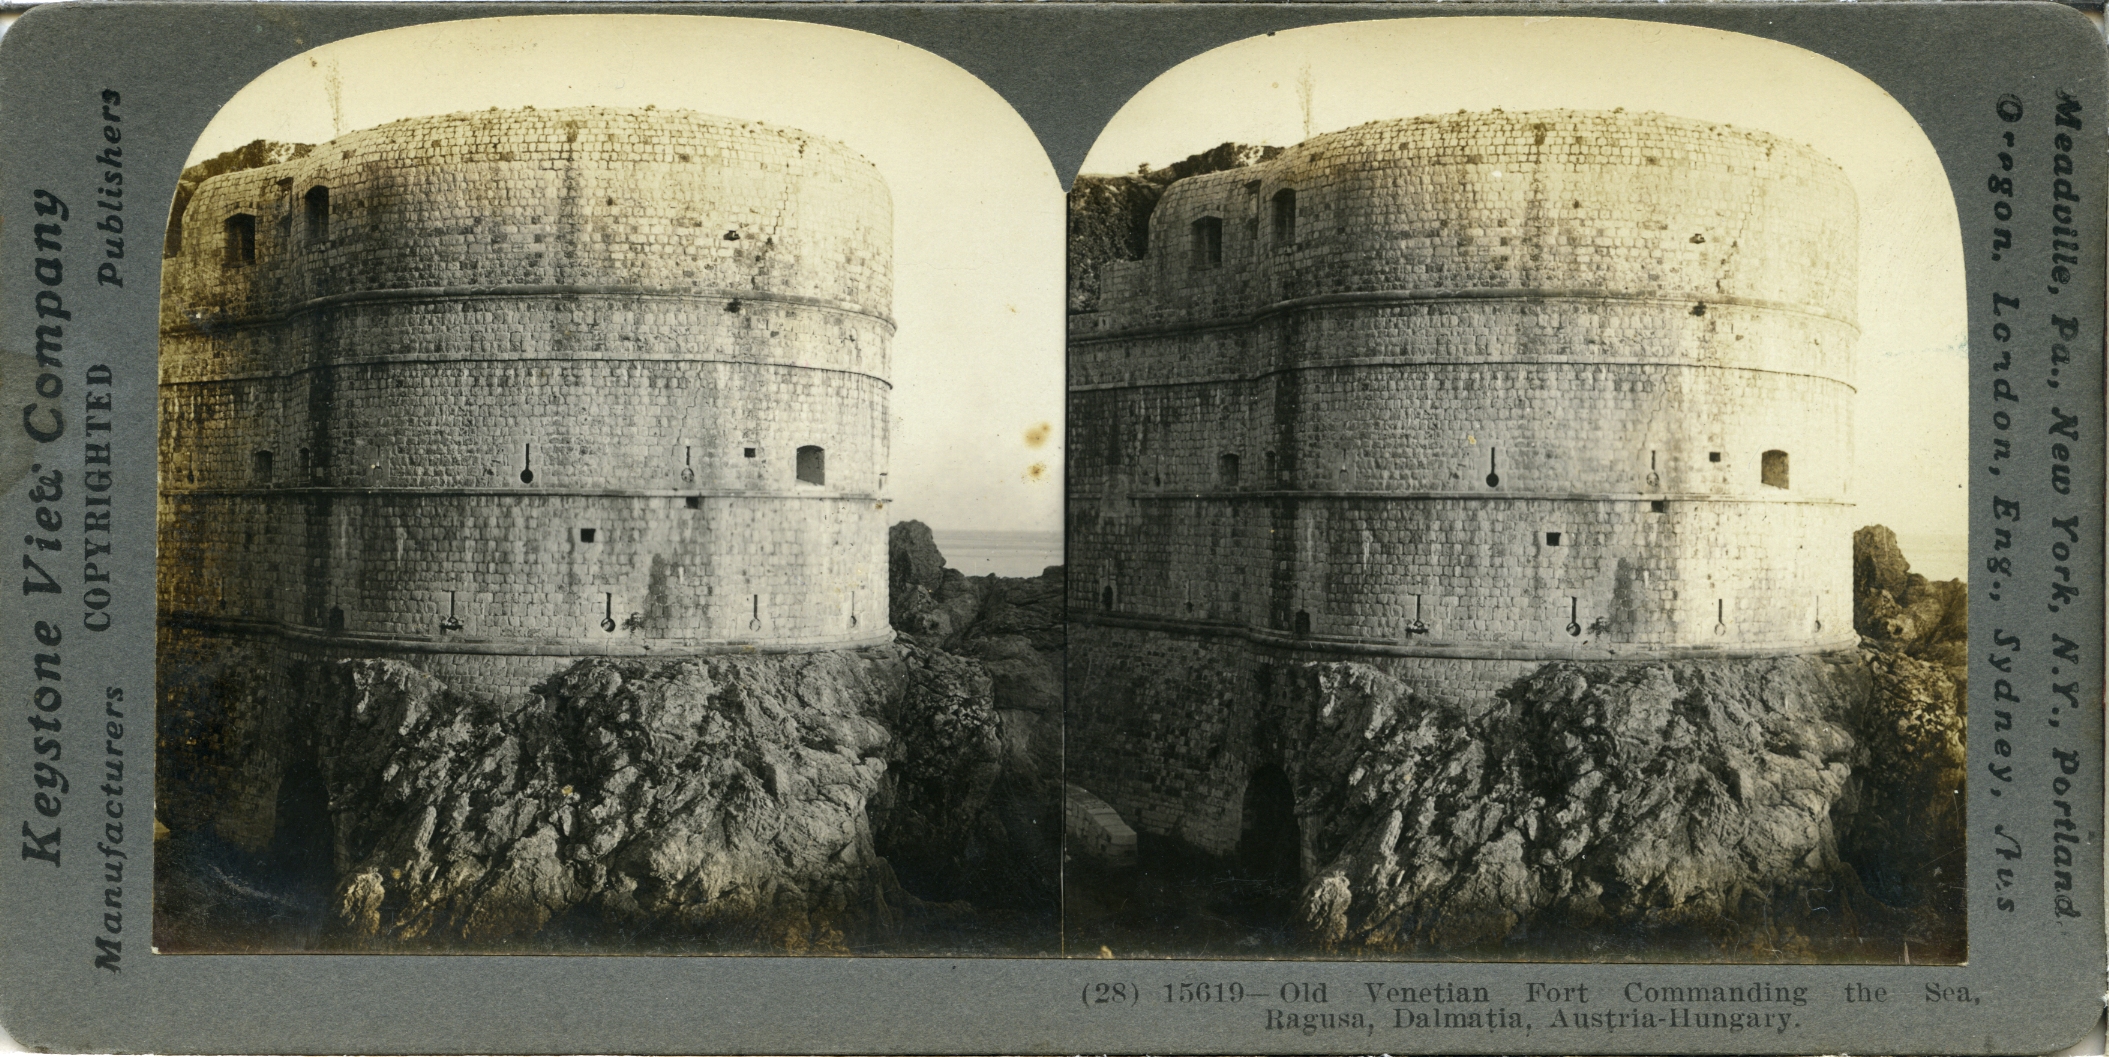 Old Venetian Fort Commanding the Sea, Ragusa, Dalmatia, Austria-Hungary